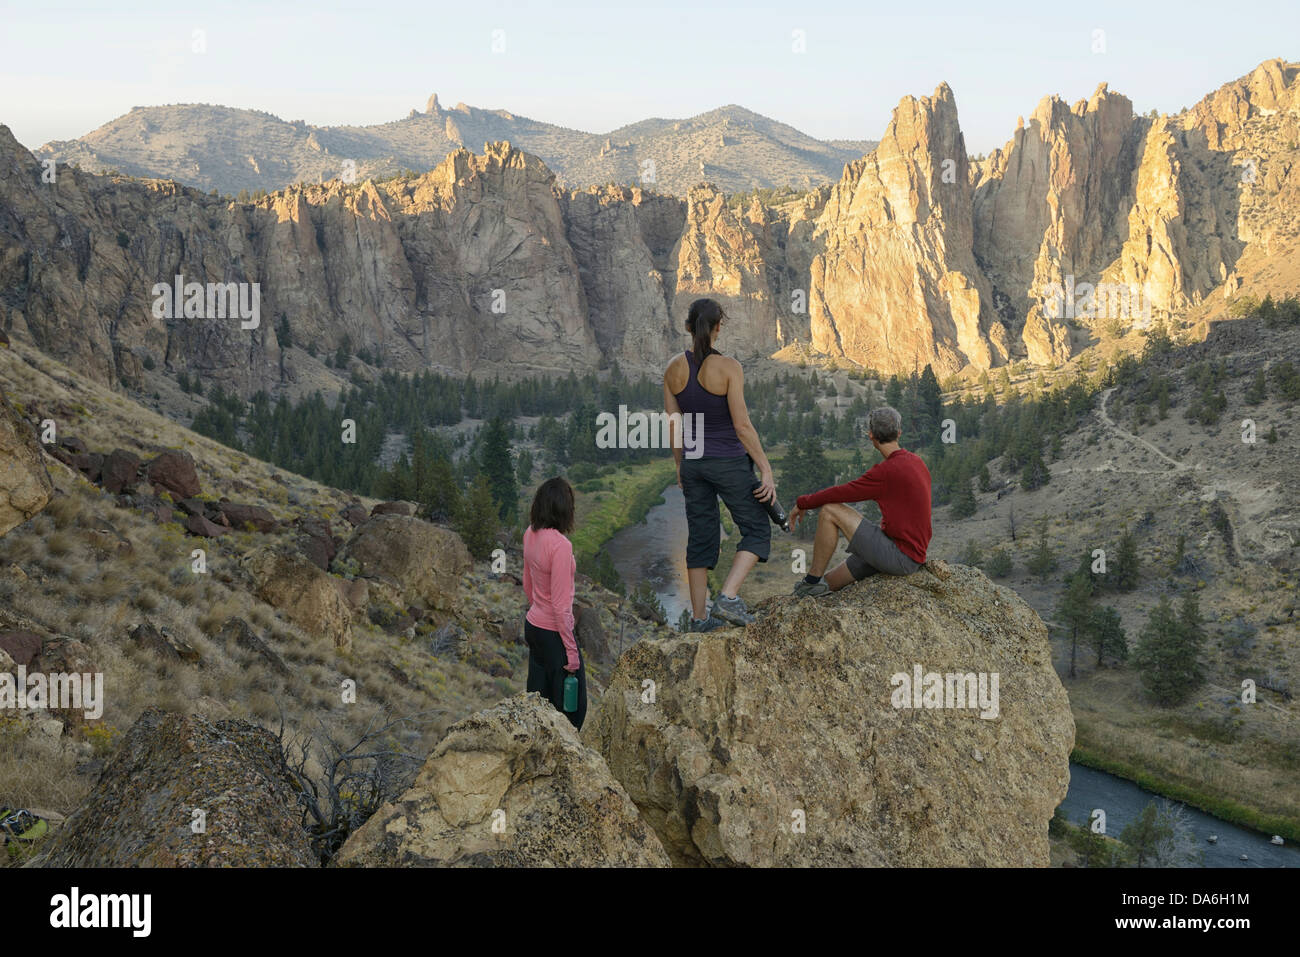 USA, United States, America, Oregon, landscape, rocks, group, man, woman, rest, hiking, sports, Deschutes, County, Hydro Flask, Stock Photo